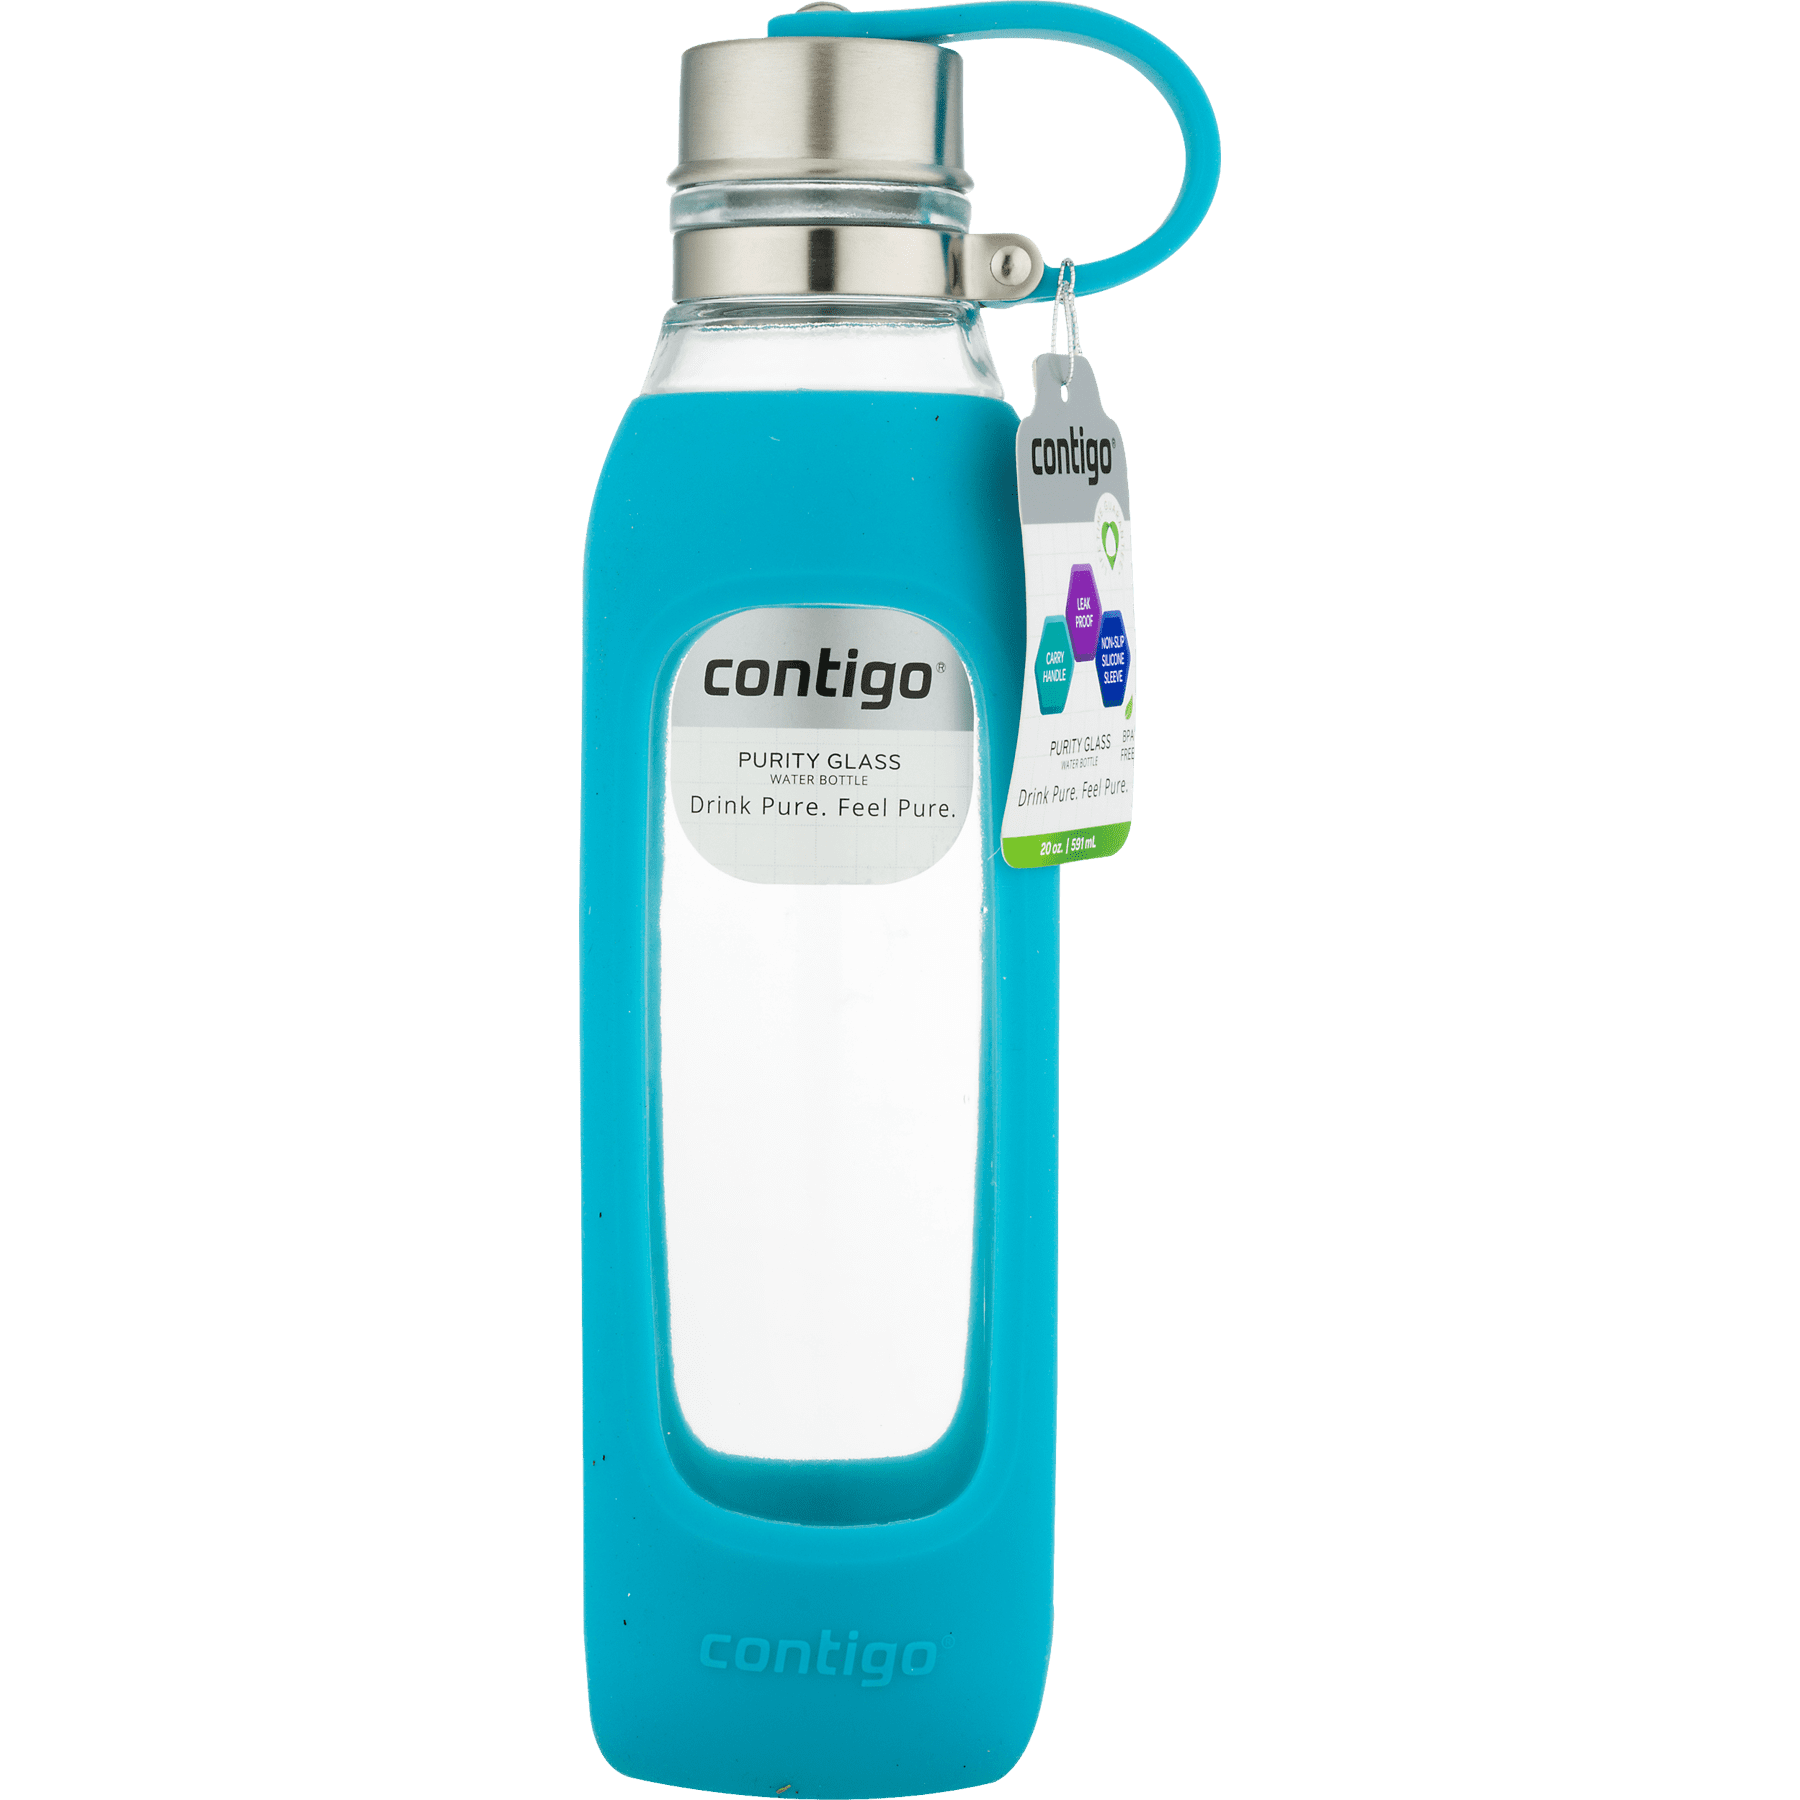 Contigo Purity Glass Water Bottle - Smoke, 20 oz - Kroger